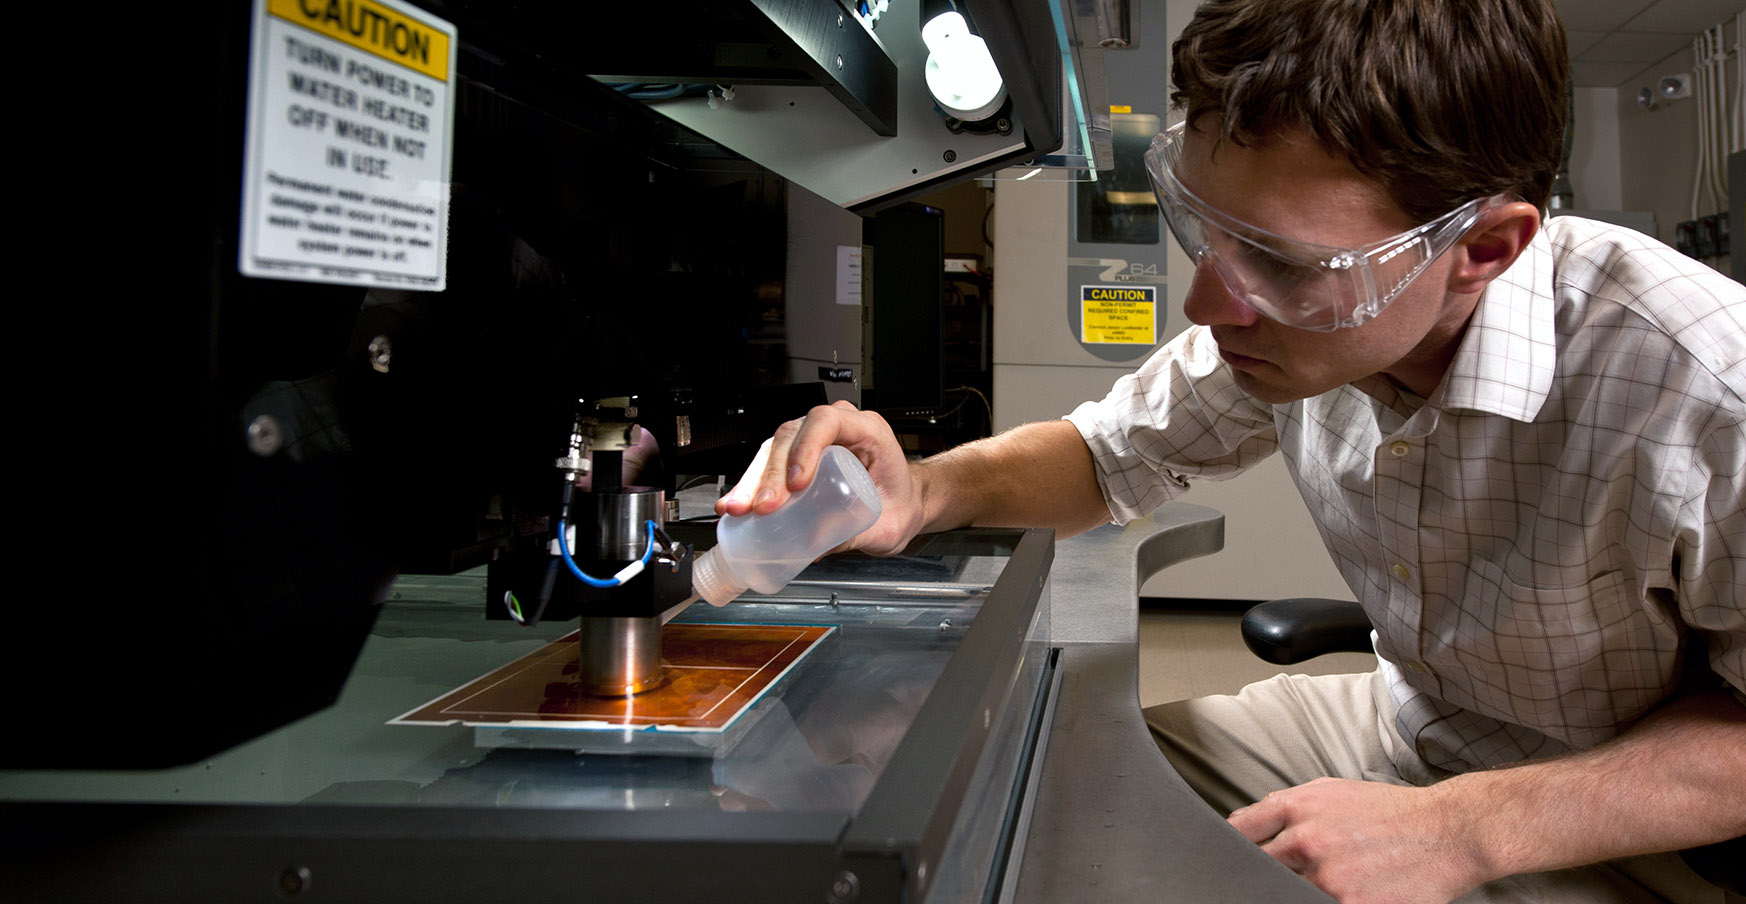 Researcher applying a liquid on a plate below lab equipment.